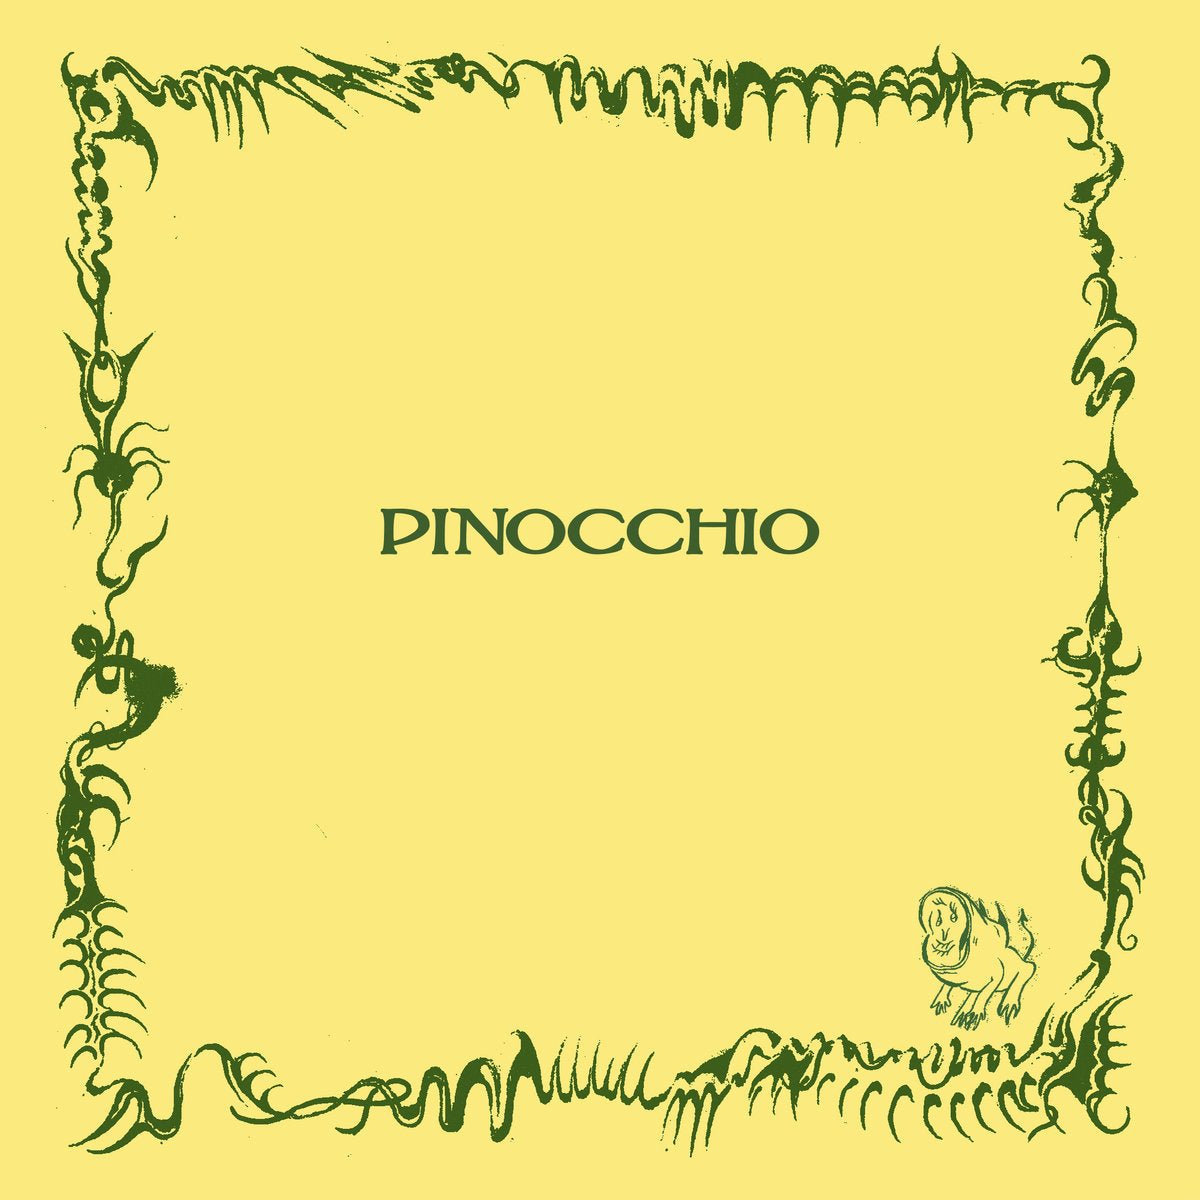 Pinocchio - s/t 7" - Vinyl - Toxic State